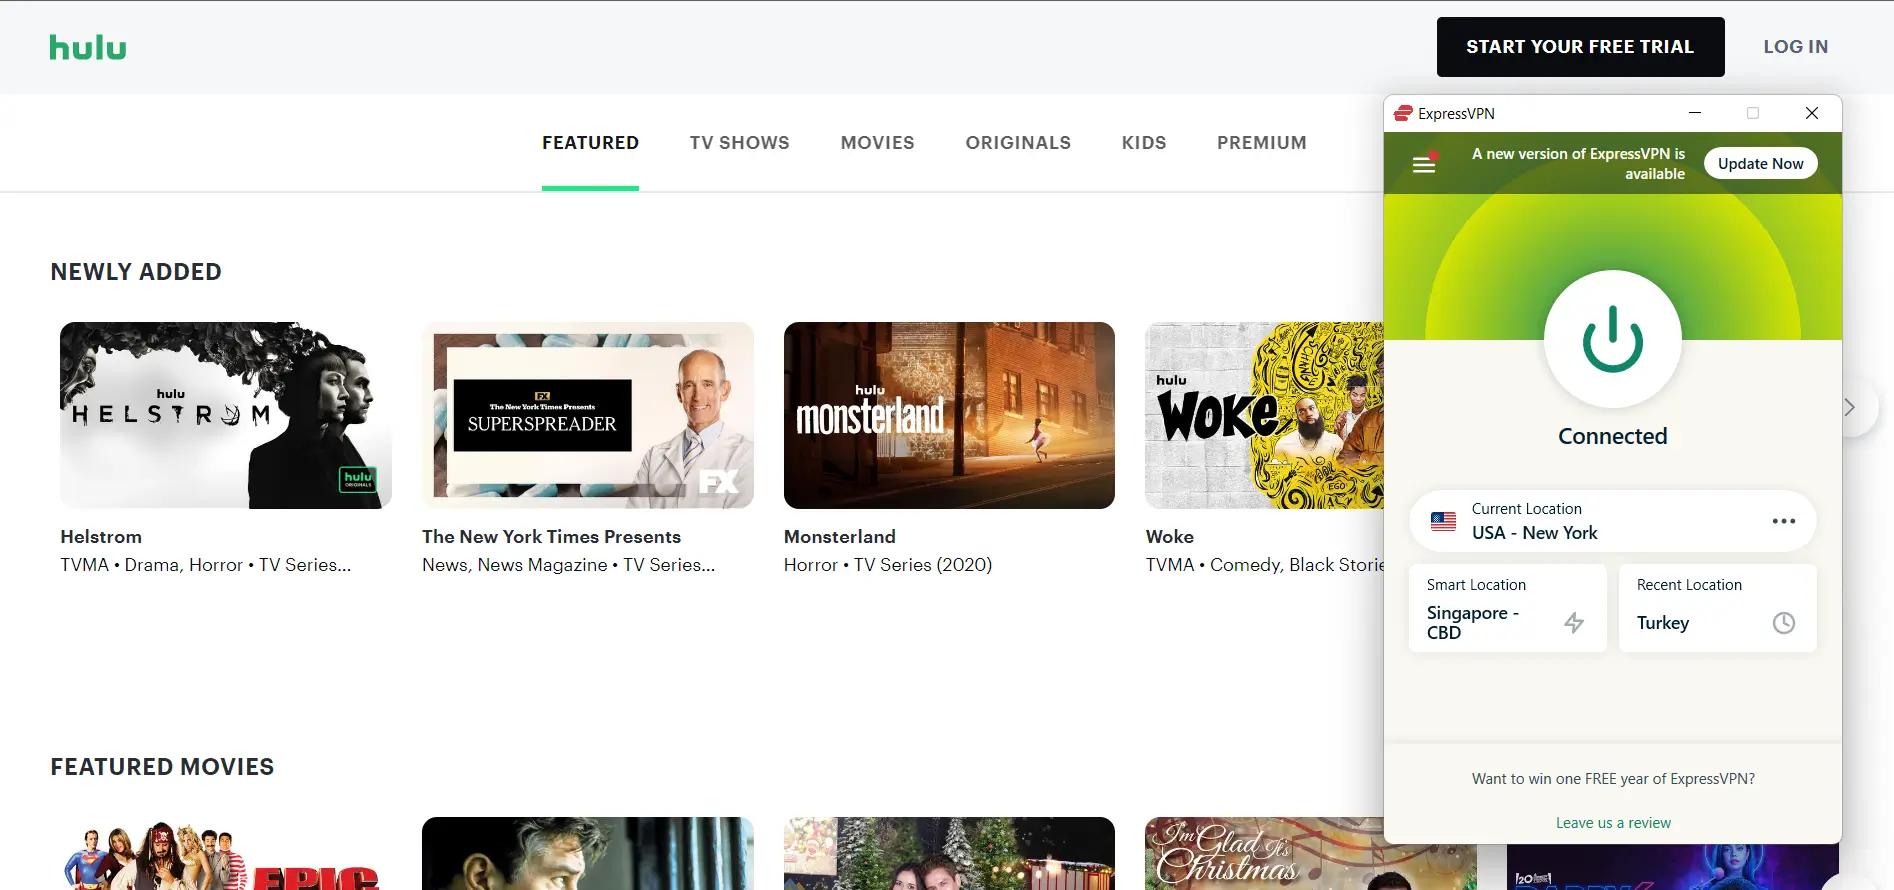 Hulu on lg smart tv with expressvpn